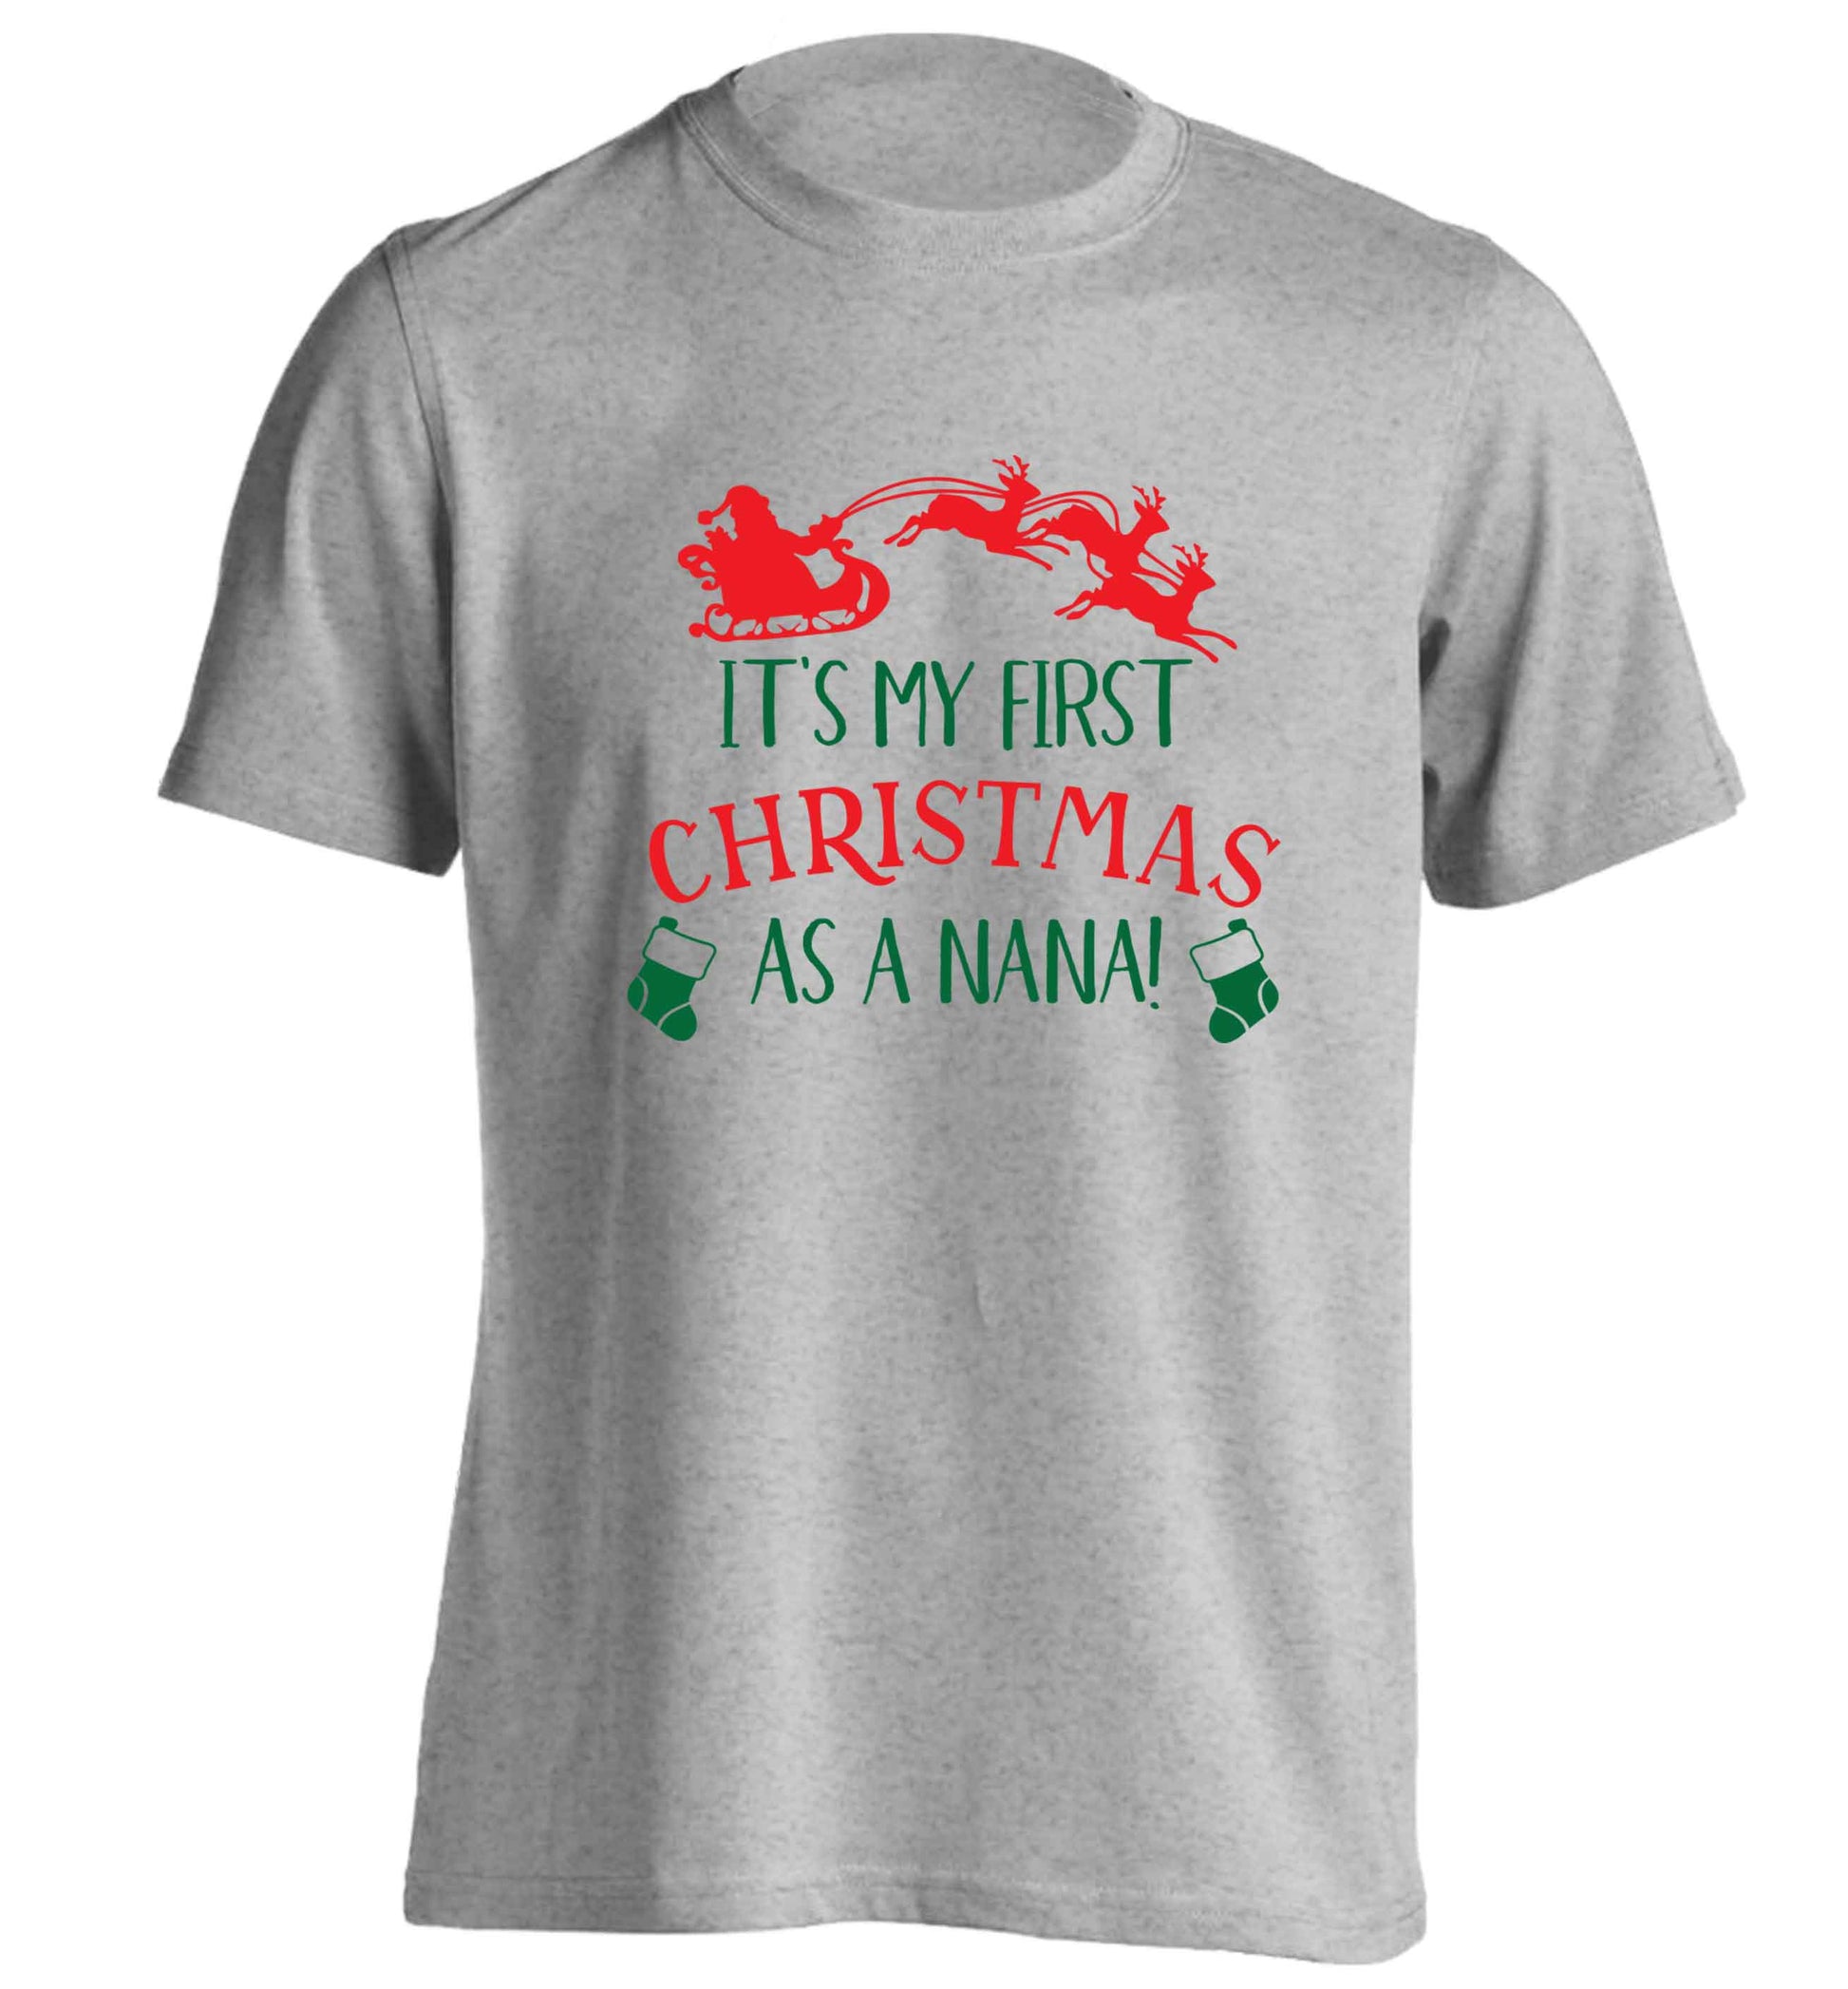 It's my first Christmas as a nana adults unisex grey Tshirt 2XL